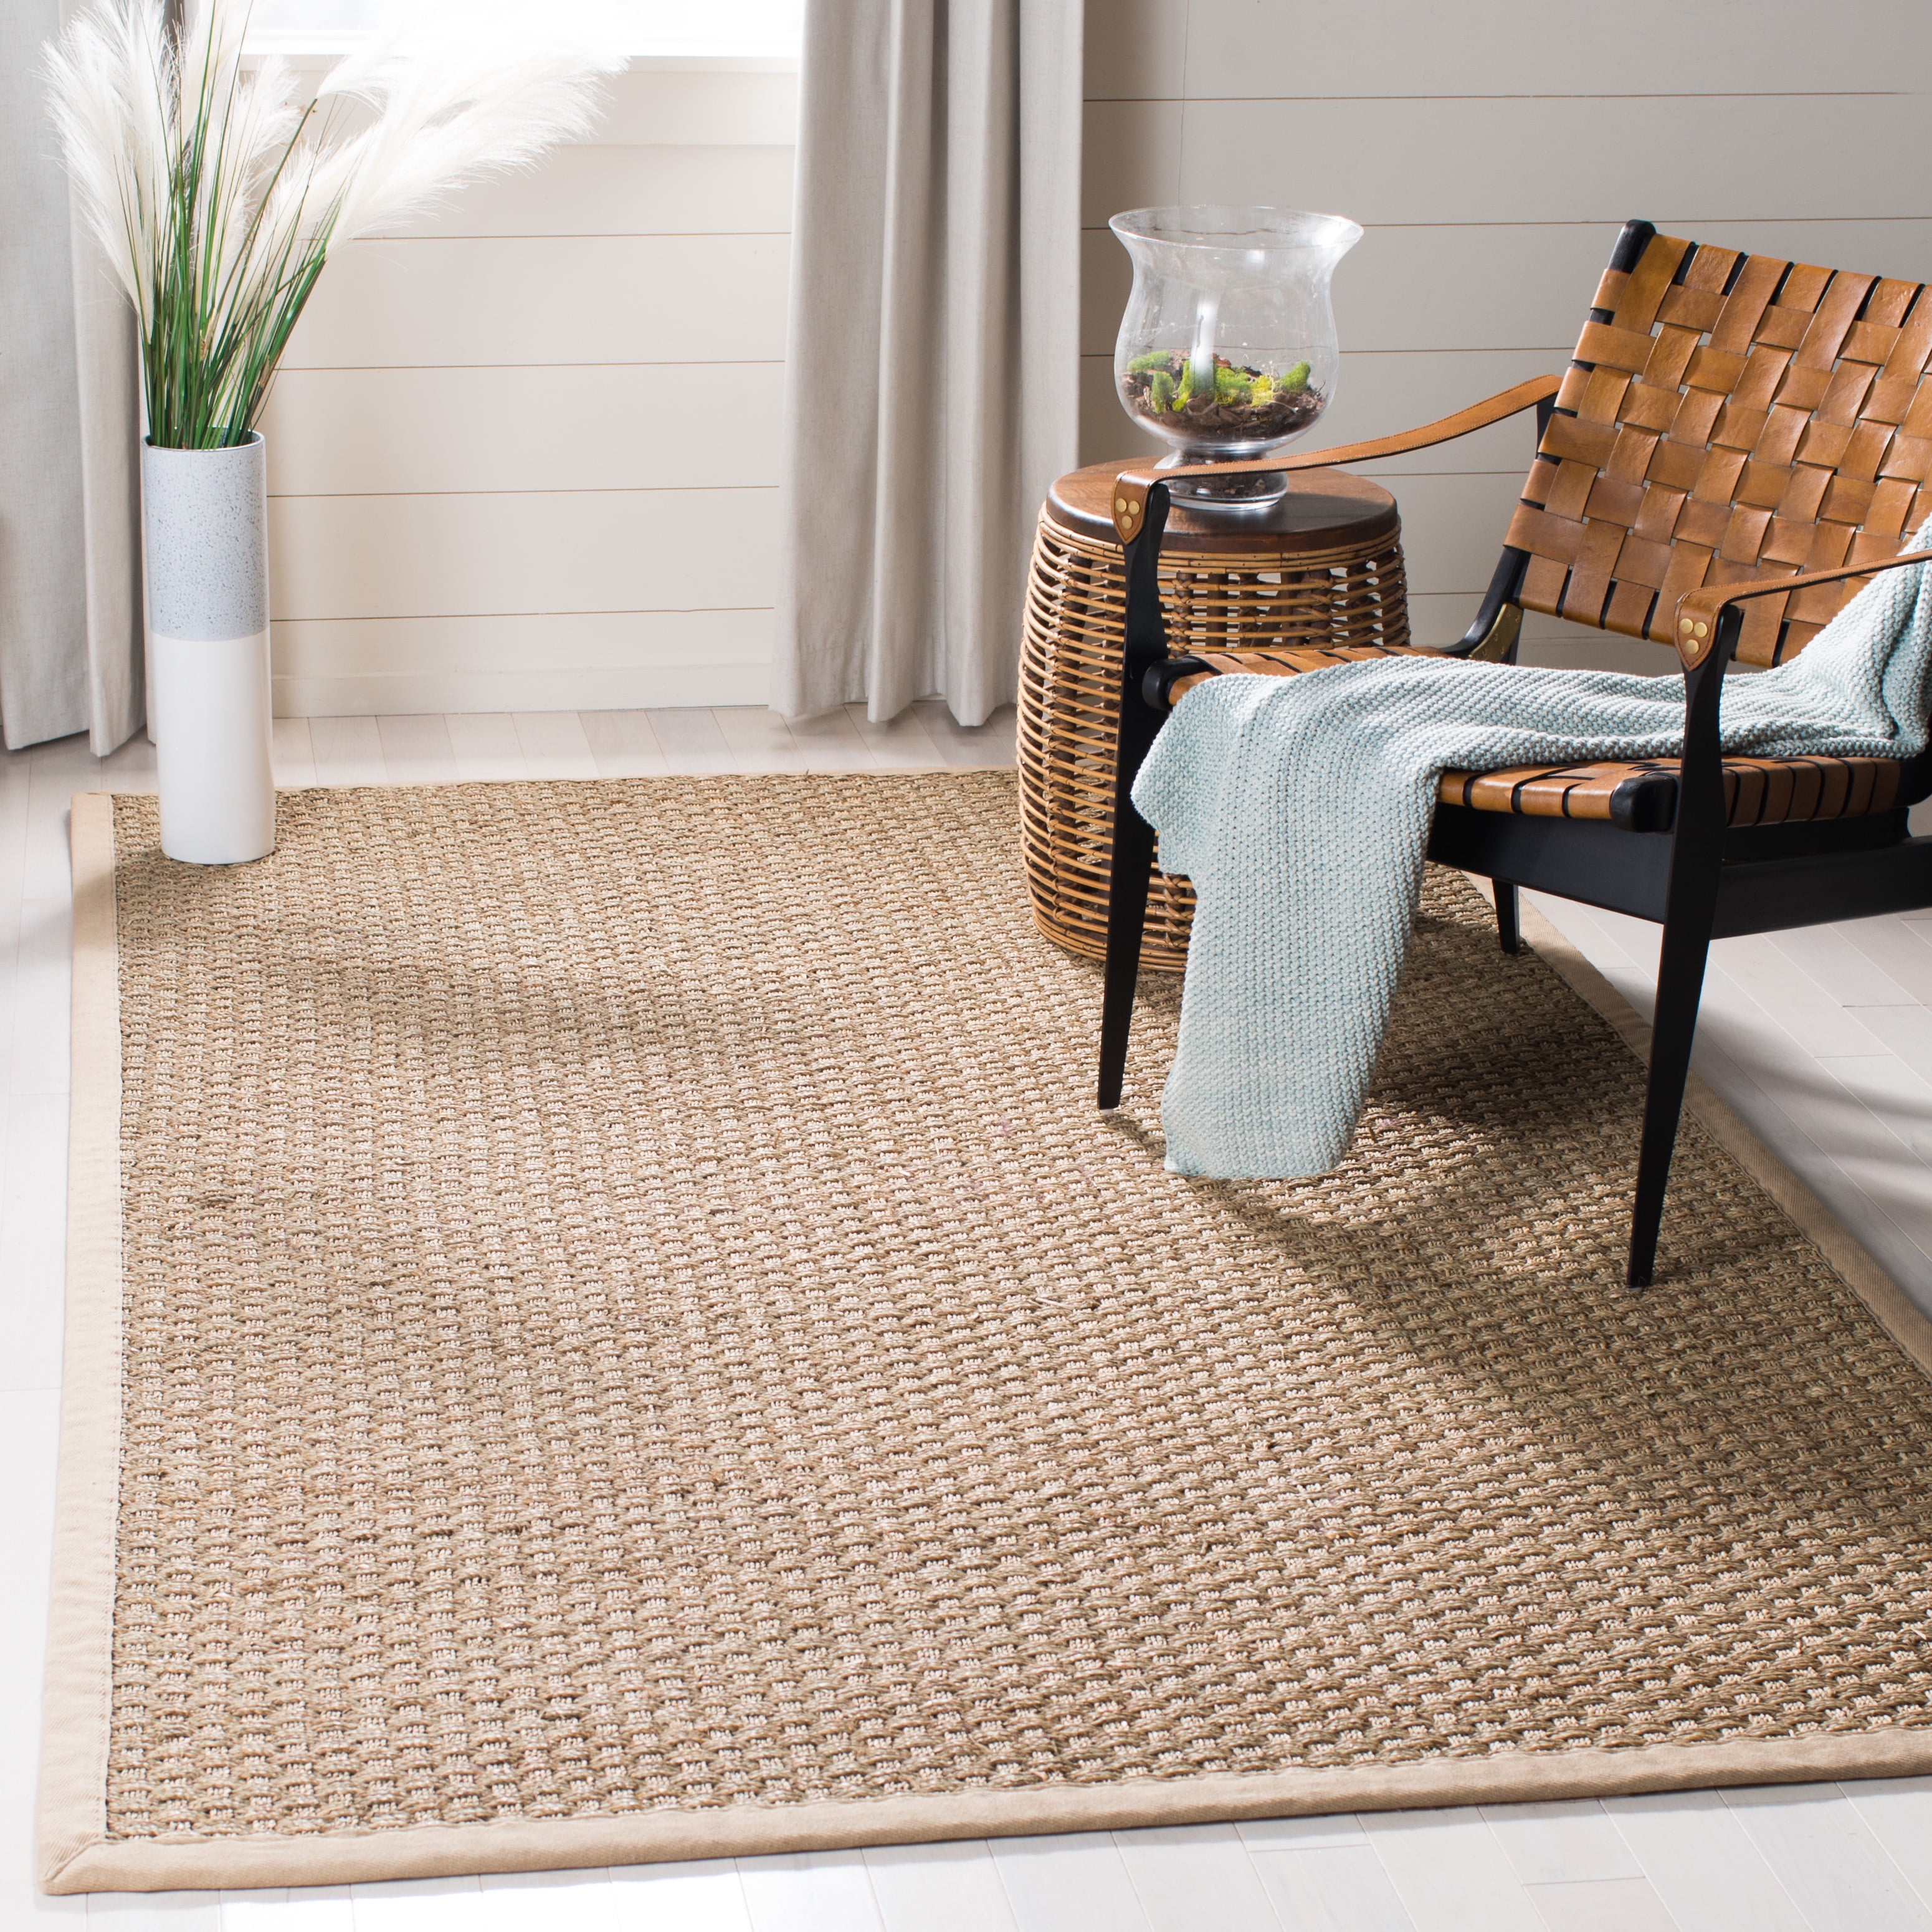 Jute Cotton Natural For Home Decor Carpet Modern 2x3 Feet Rectangle Floor Rugs 